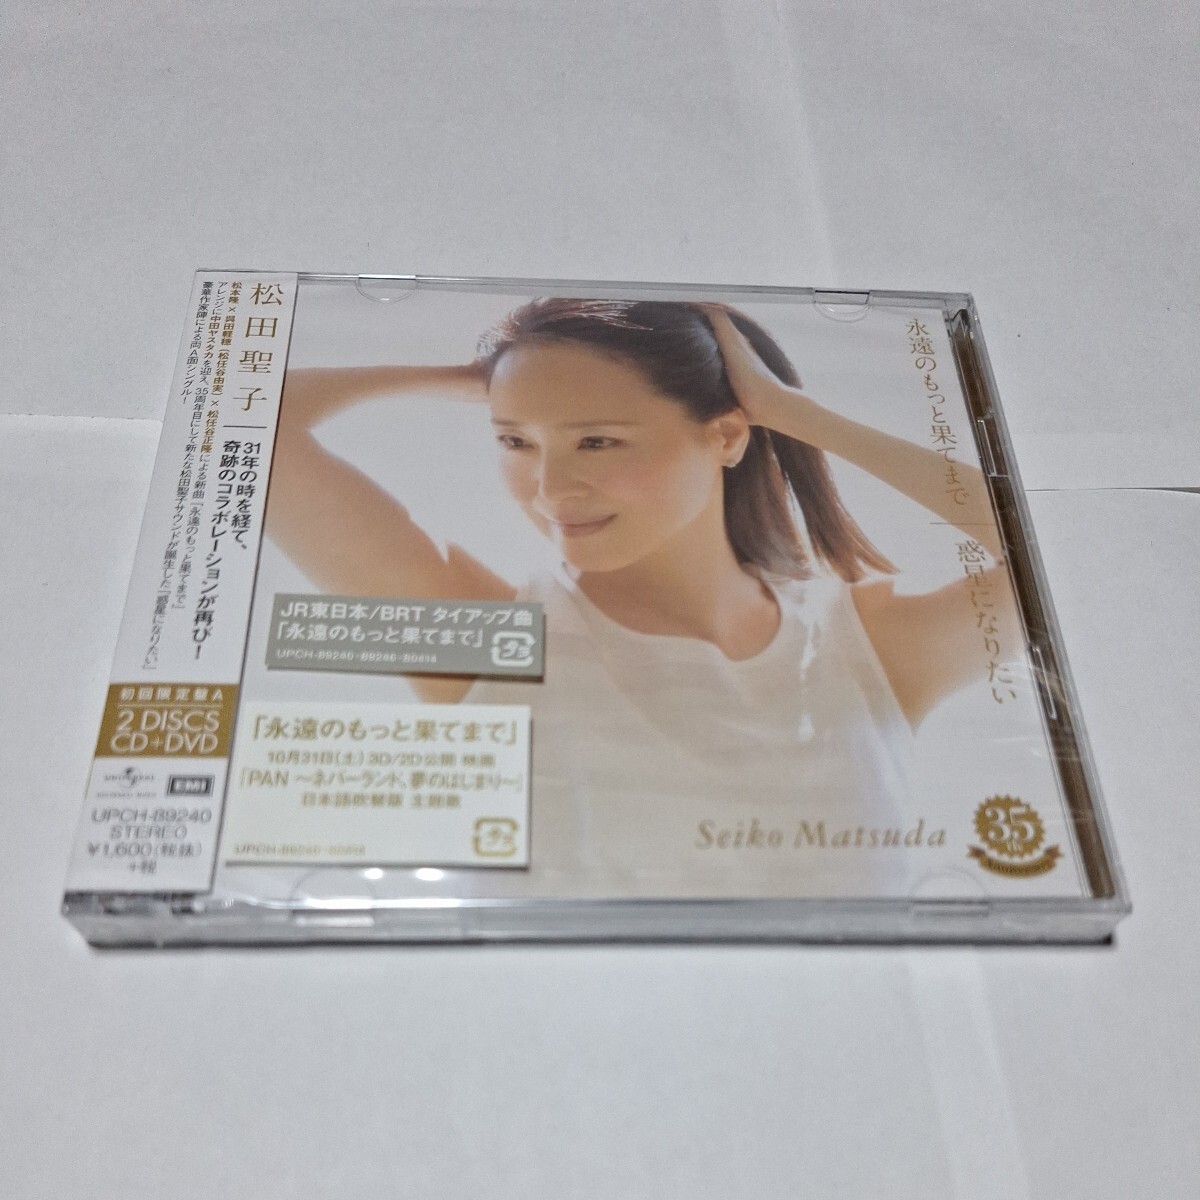  new goods unopened Matsuda Seiko Blue-ray,DVD,CD 8 pieces set 